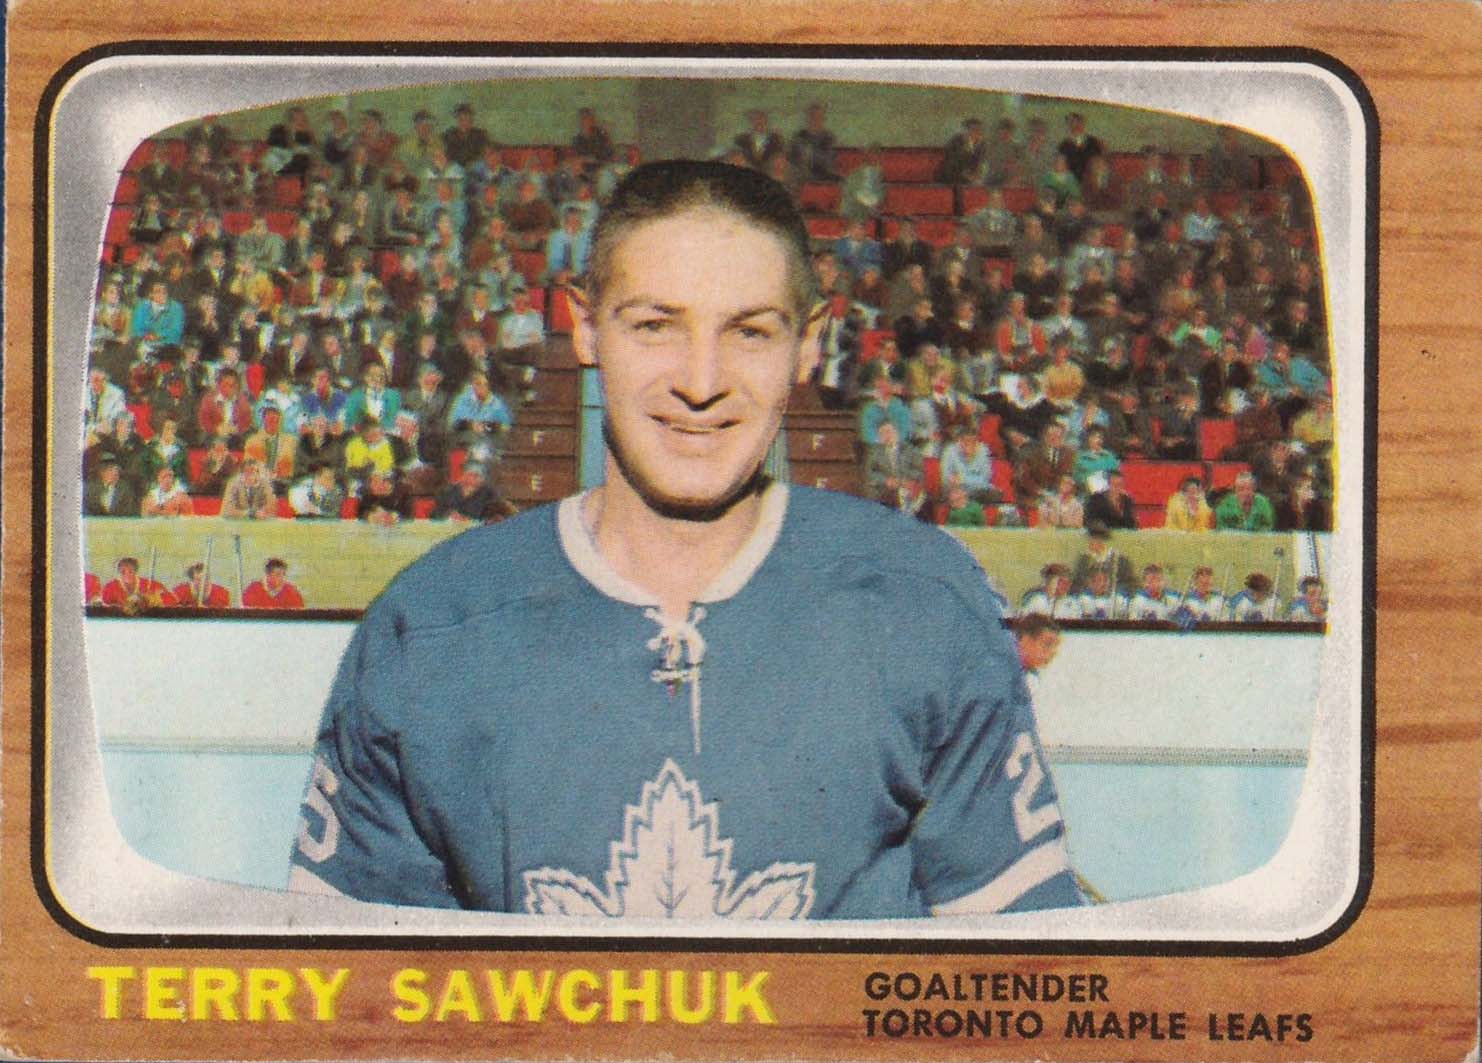 Terry Sawchuk - Wikipedia